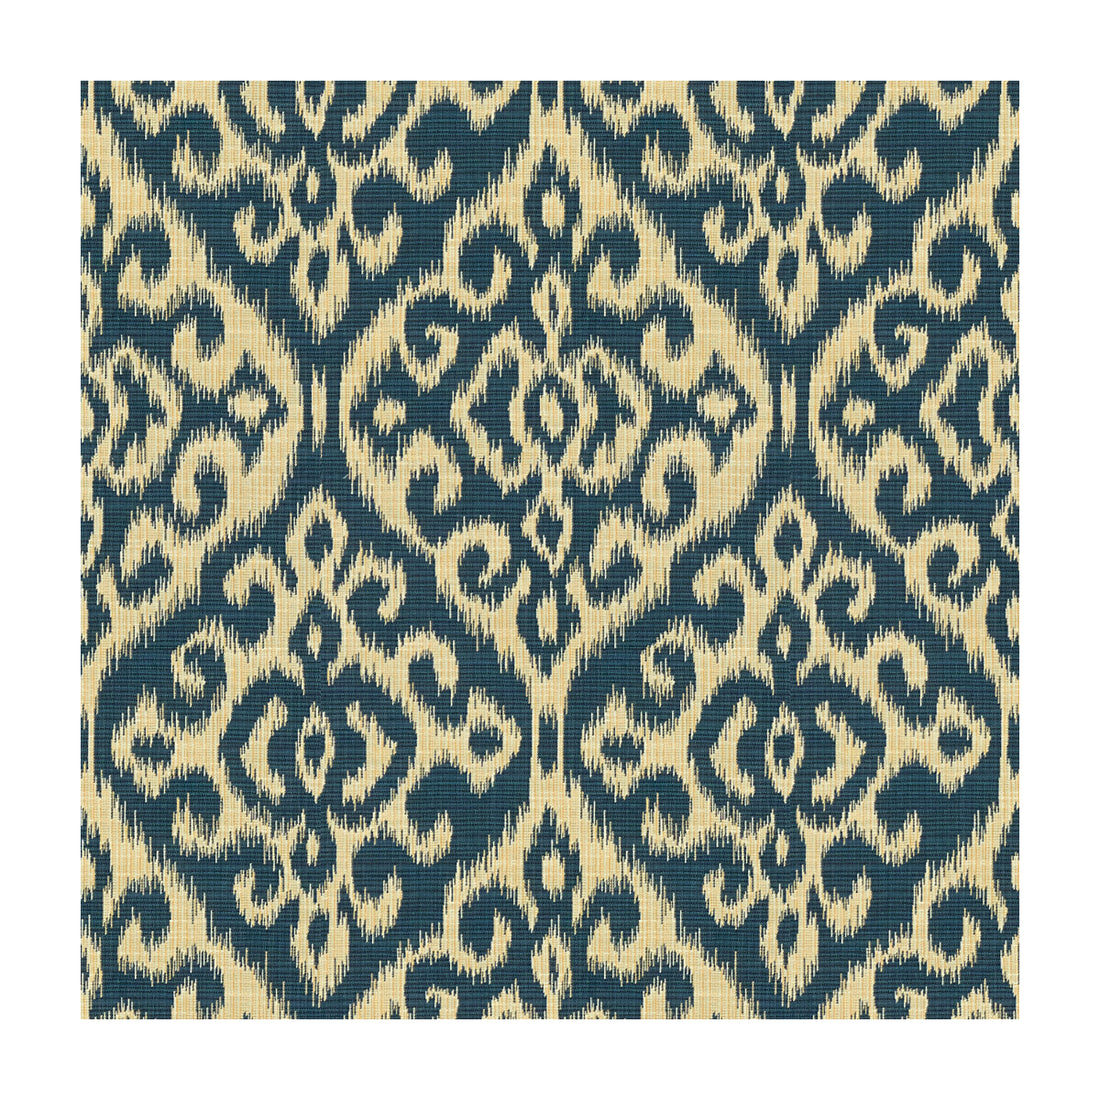 Kravet Design fabric in 34107-516 color - pattern 34107.516.0 - by Kravet Design in the Indigo collection